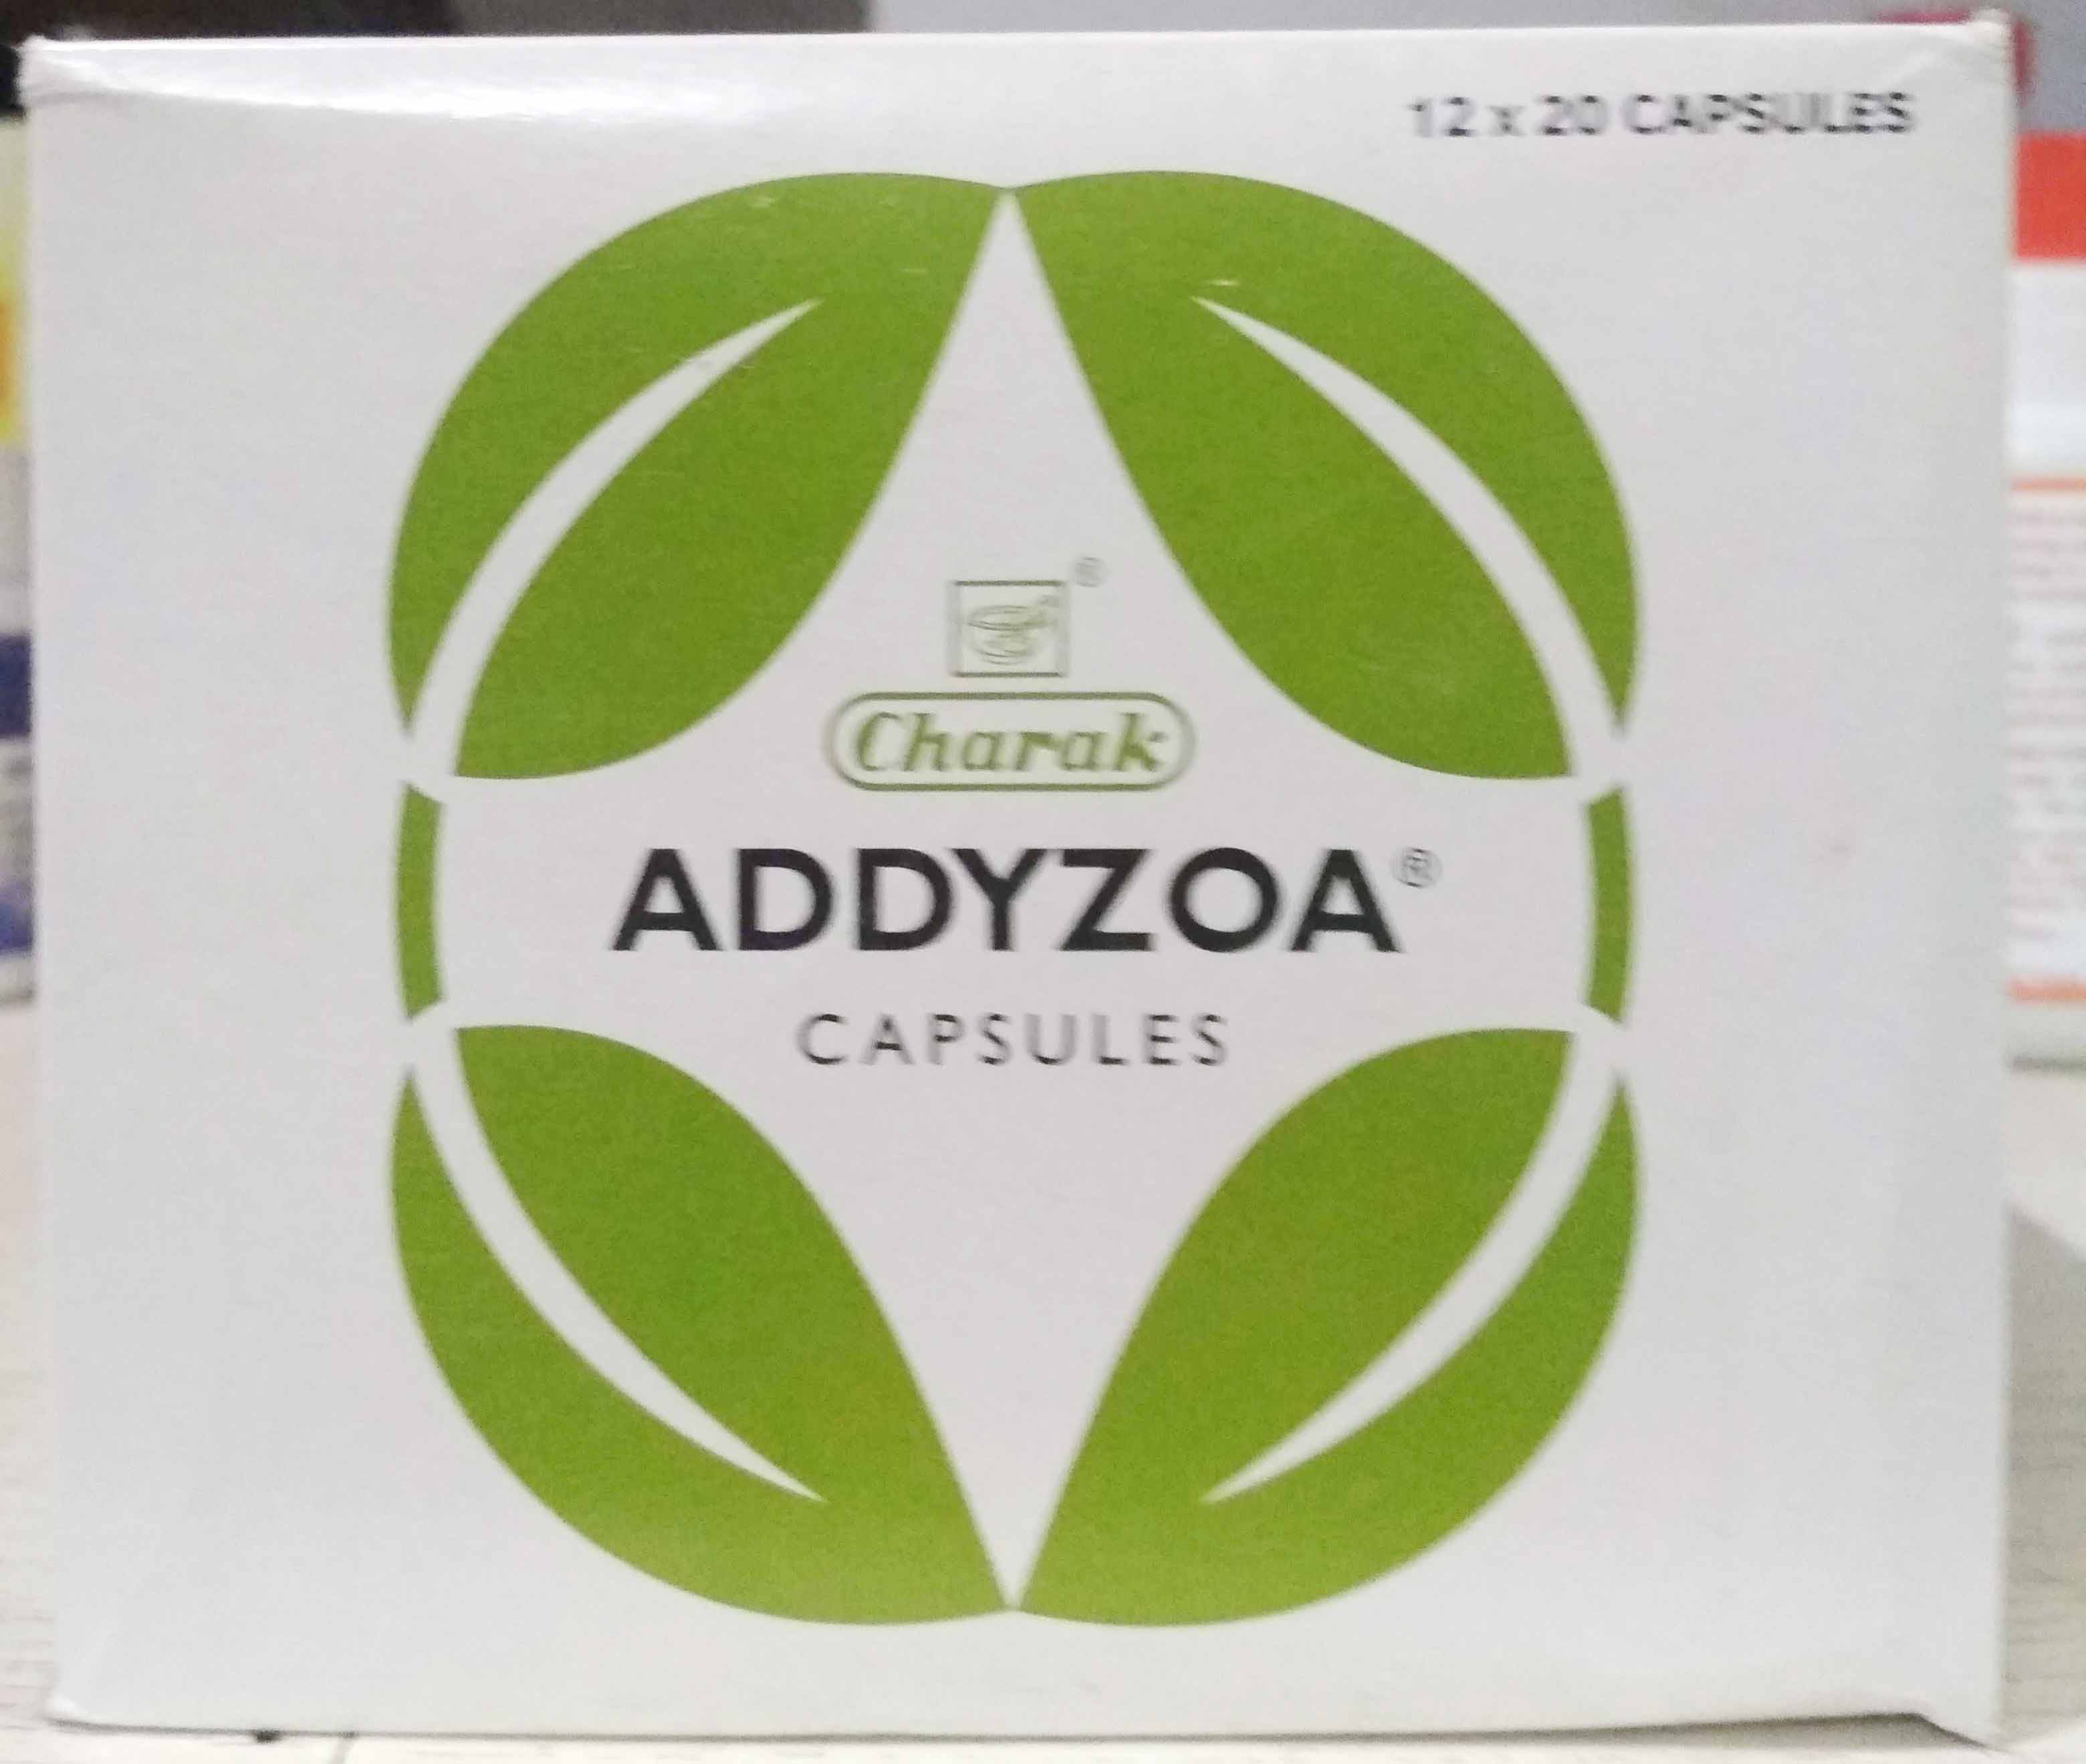 addyzoa capsule 20cap upto 15% off Charak Pharma Mumbai